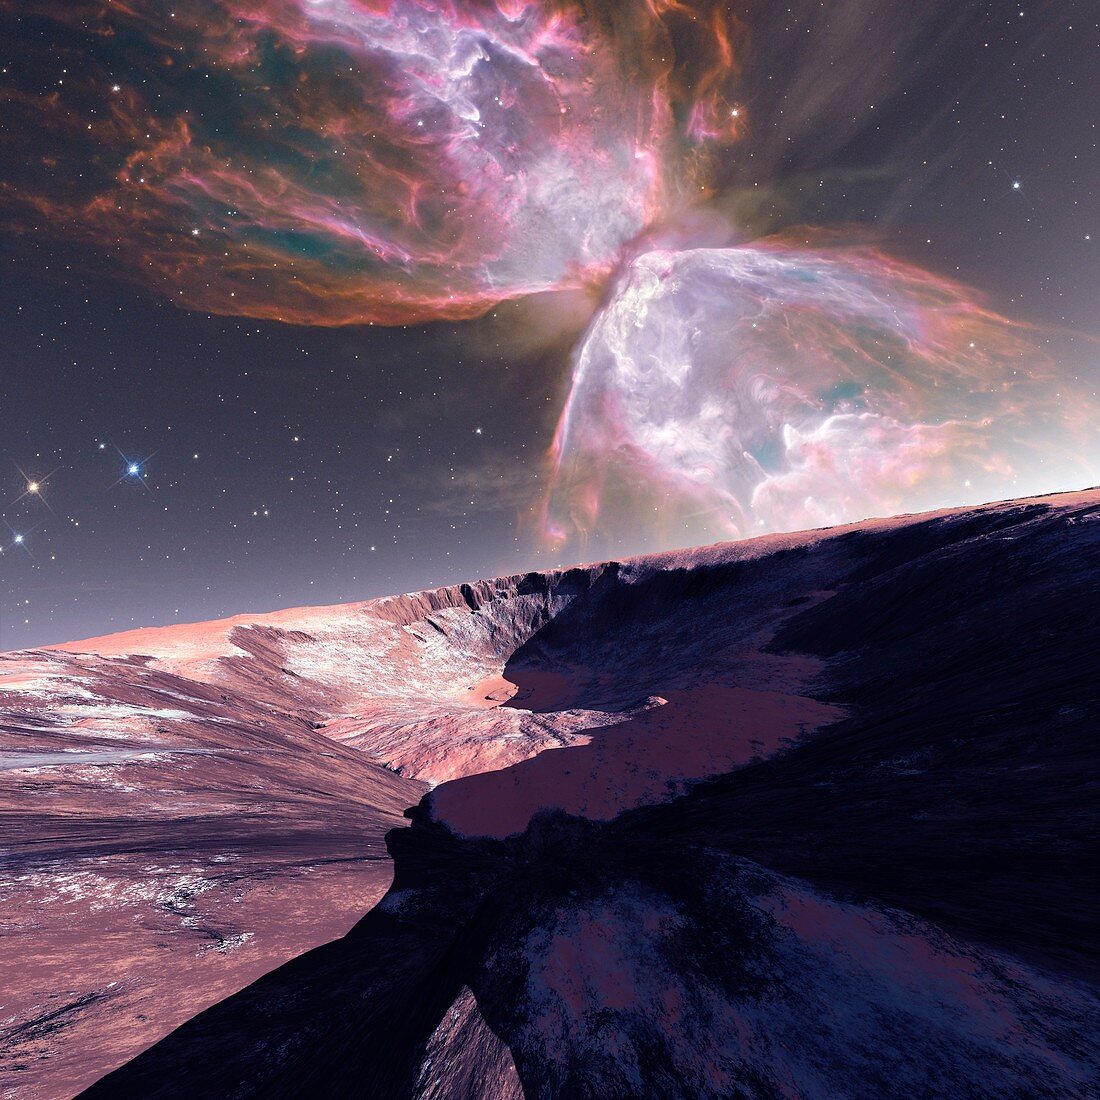 Alien planet and nebula,illustration